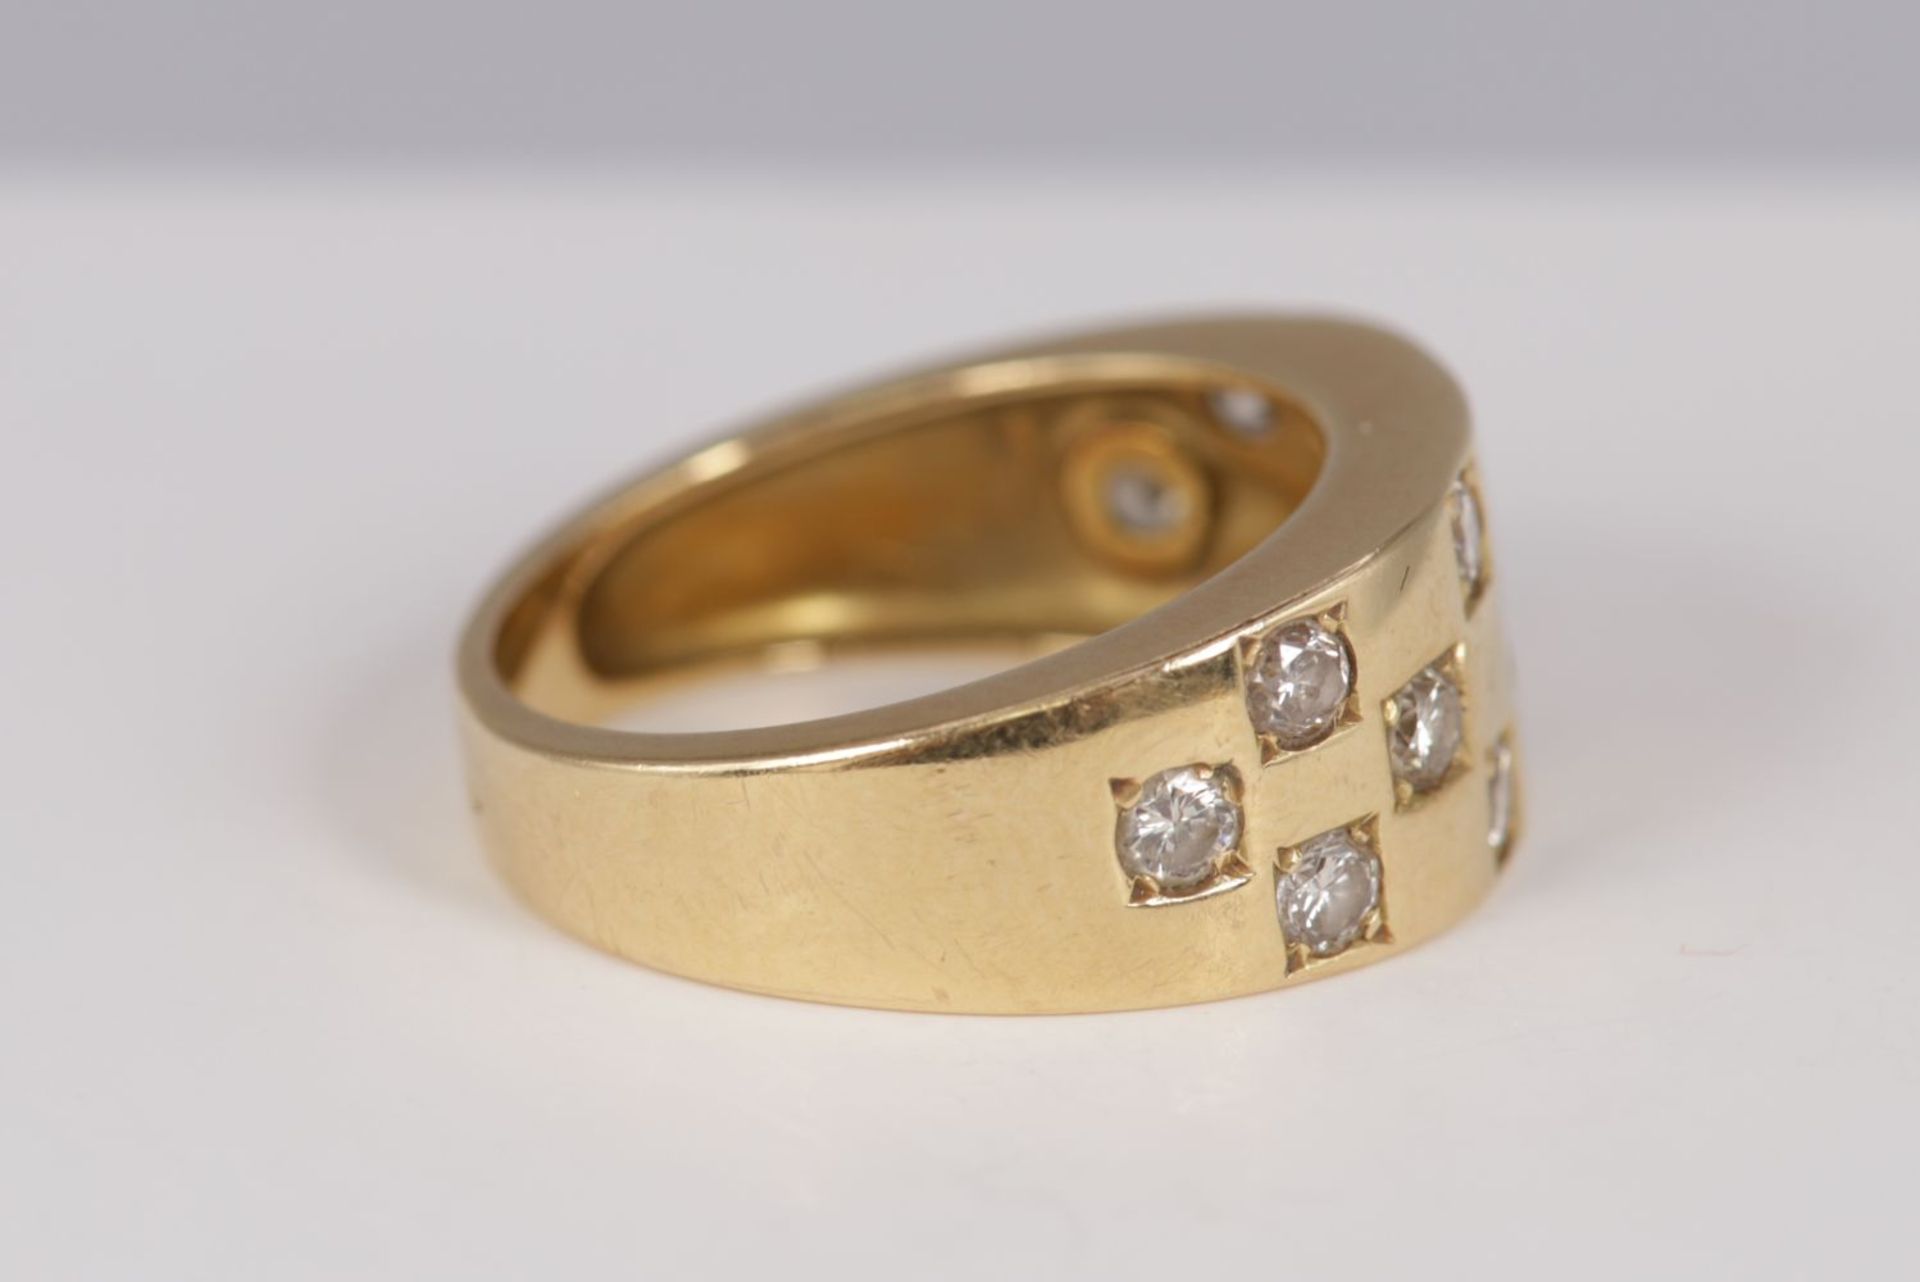 18K GOLD AND DIAMOND WEDDING BAND RING - Image 3 of 3